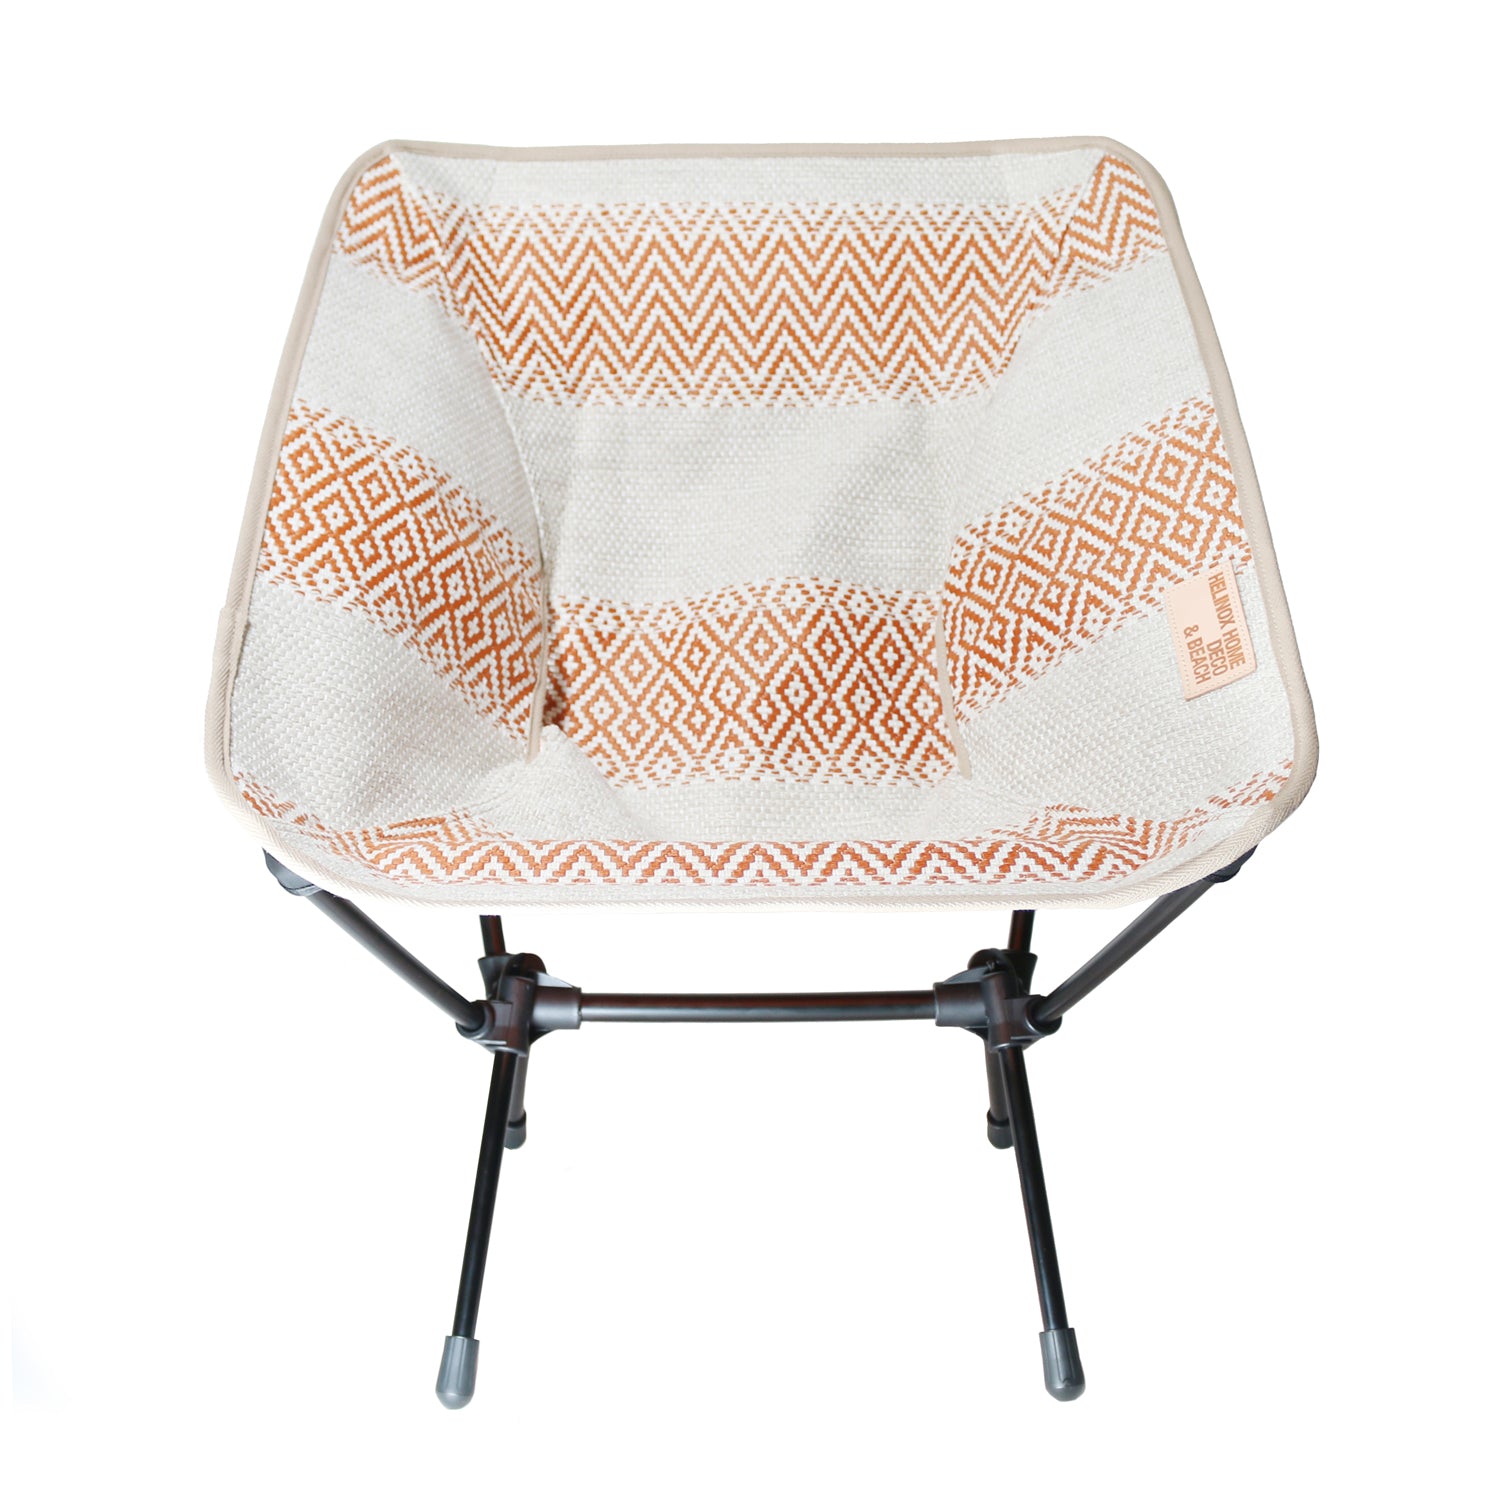 CUB0111 Helinox comfort chair | THE SUPERIOR LABOR / T.S.L CUB